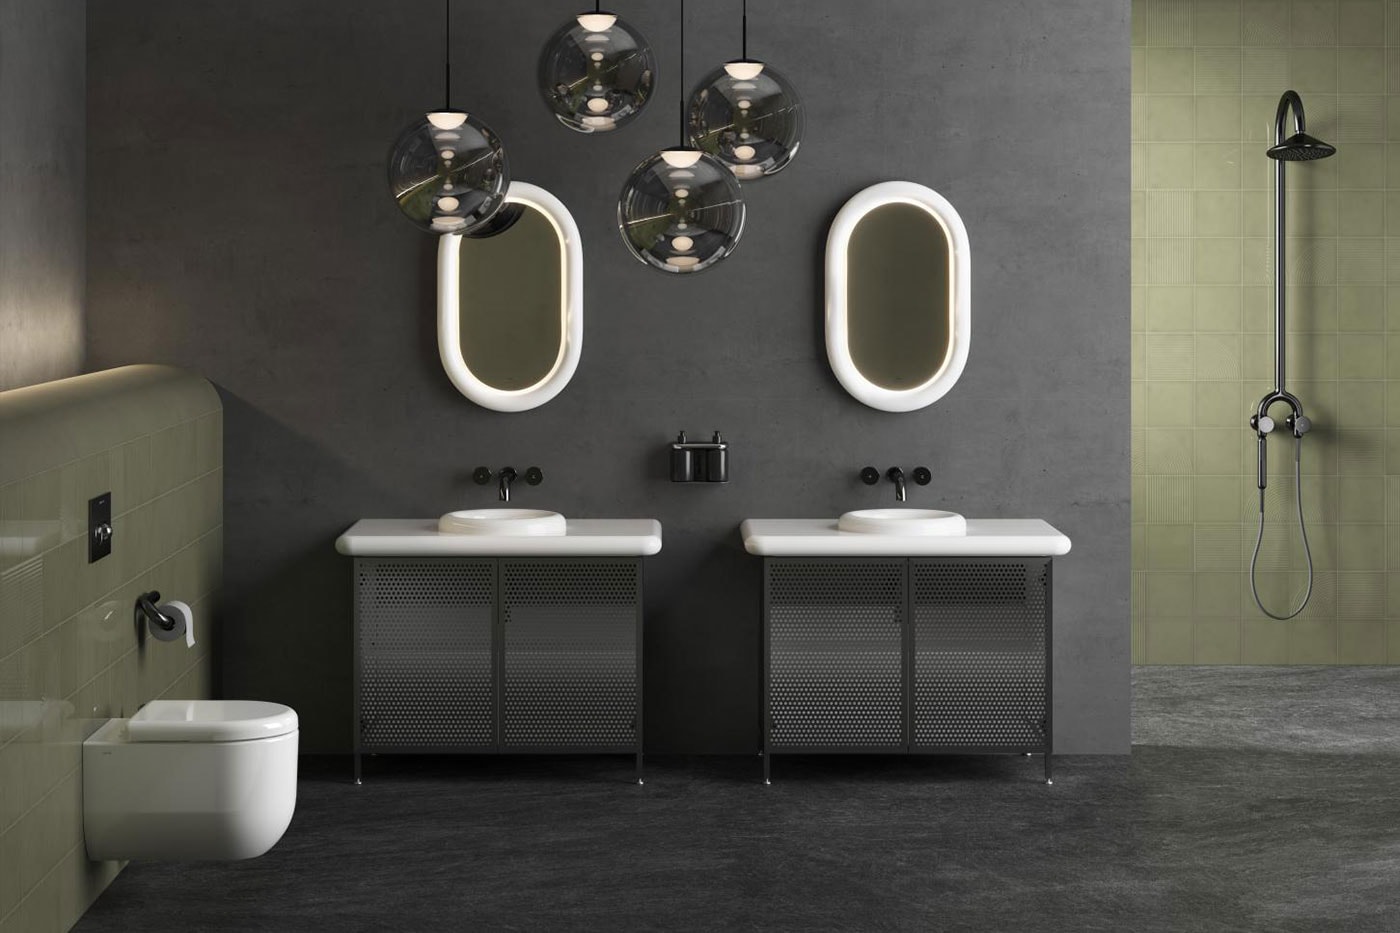 Tom Dixon VitrA Liquid bathroom collection interior design release Info